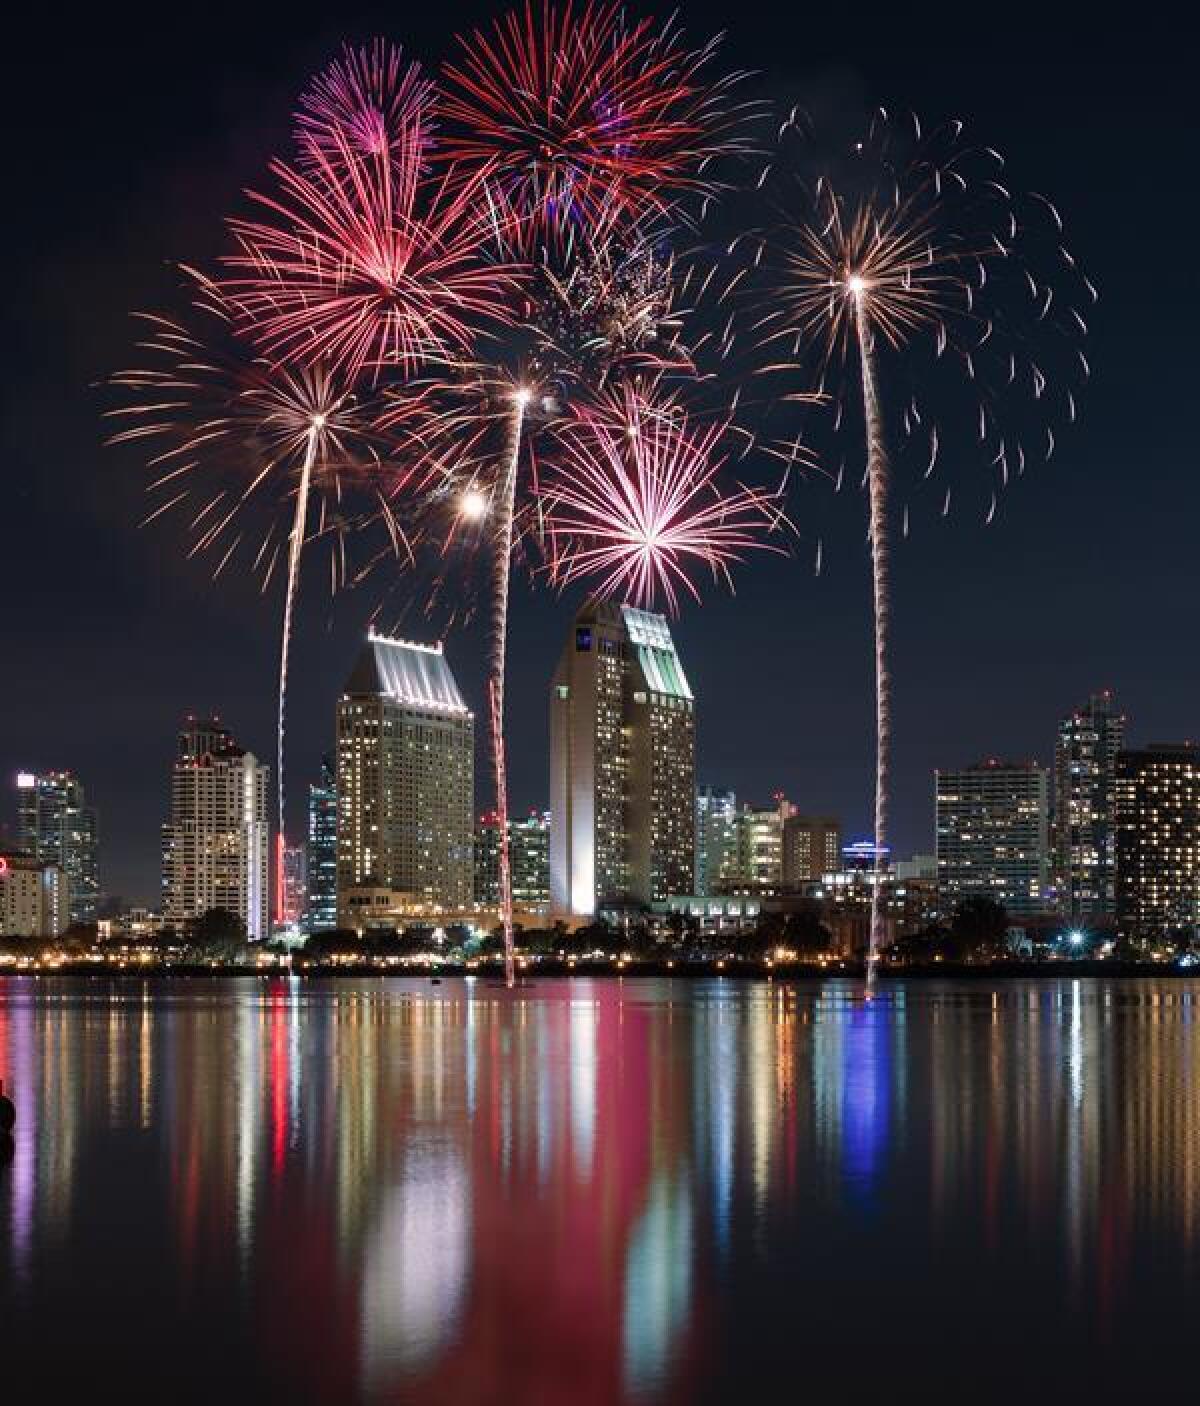 The San Diego skyline fireworks offer a stellar view. (Courtesy photo)